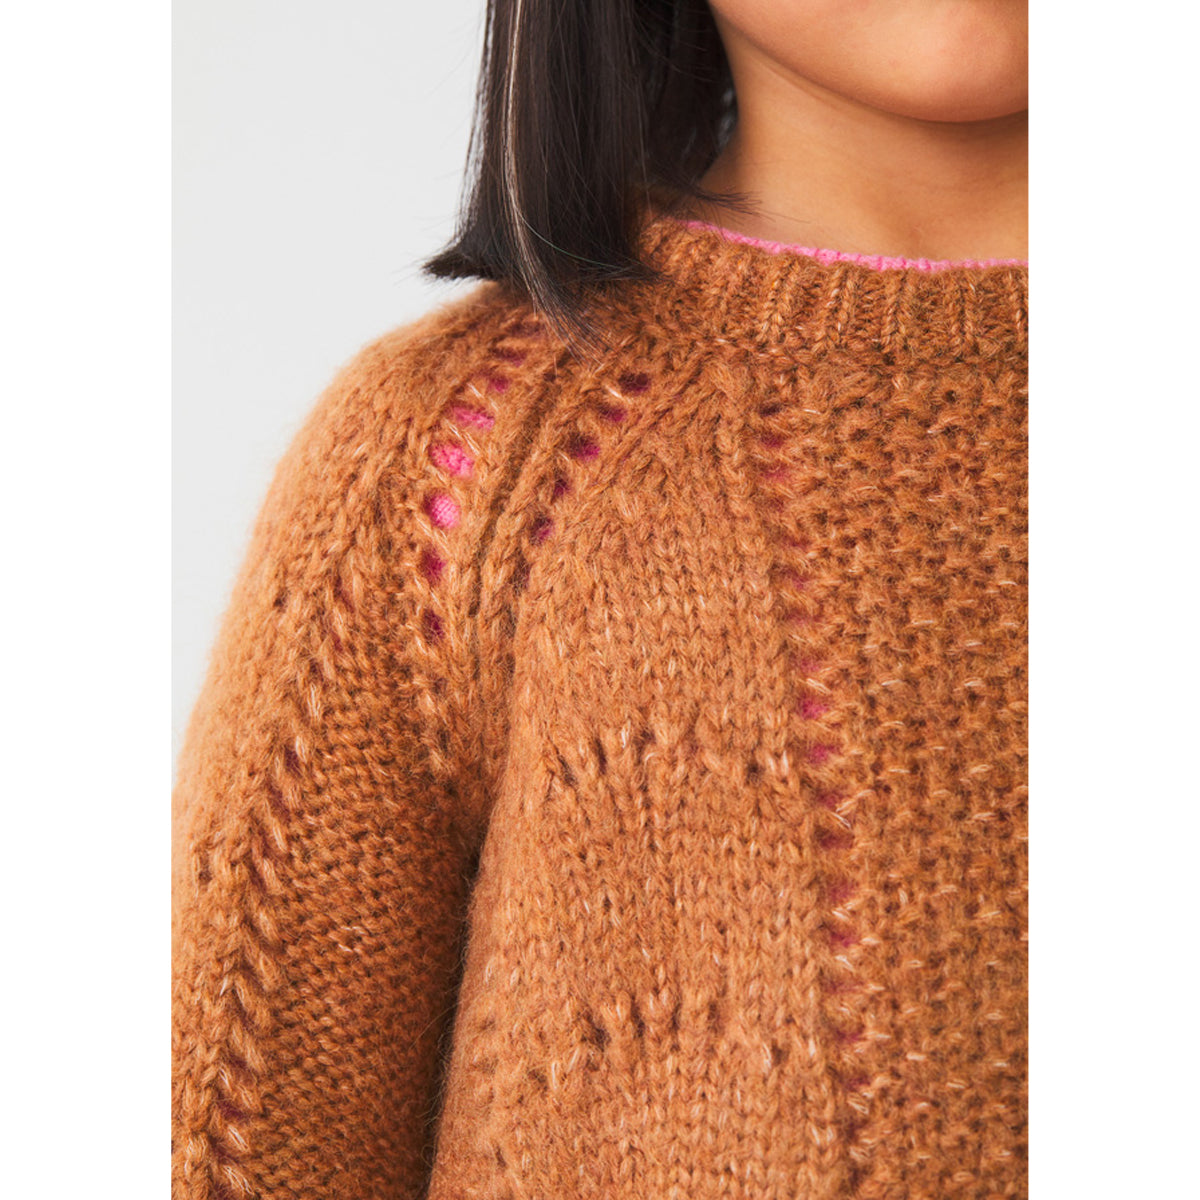 Cinnamon Openwork Sweater